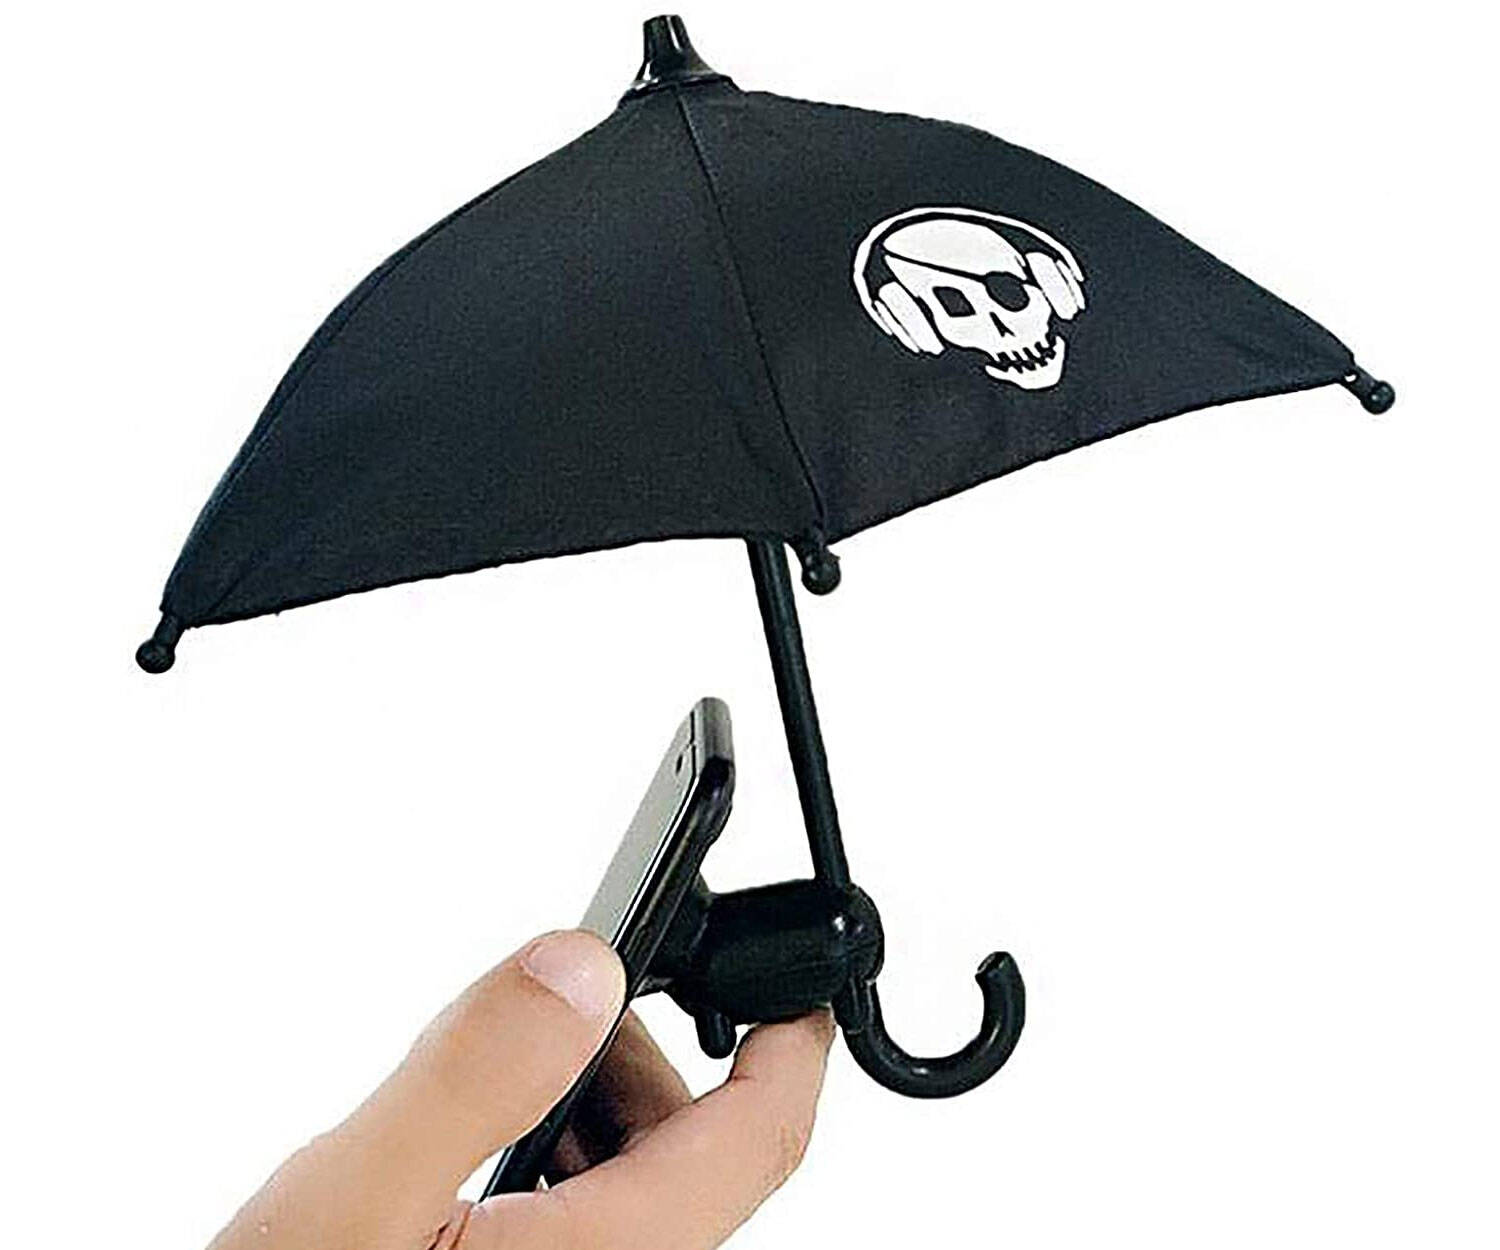 Phone Umbrella Sun Shade - coolthings.us